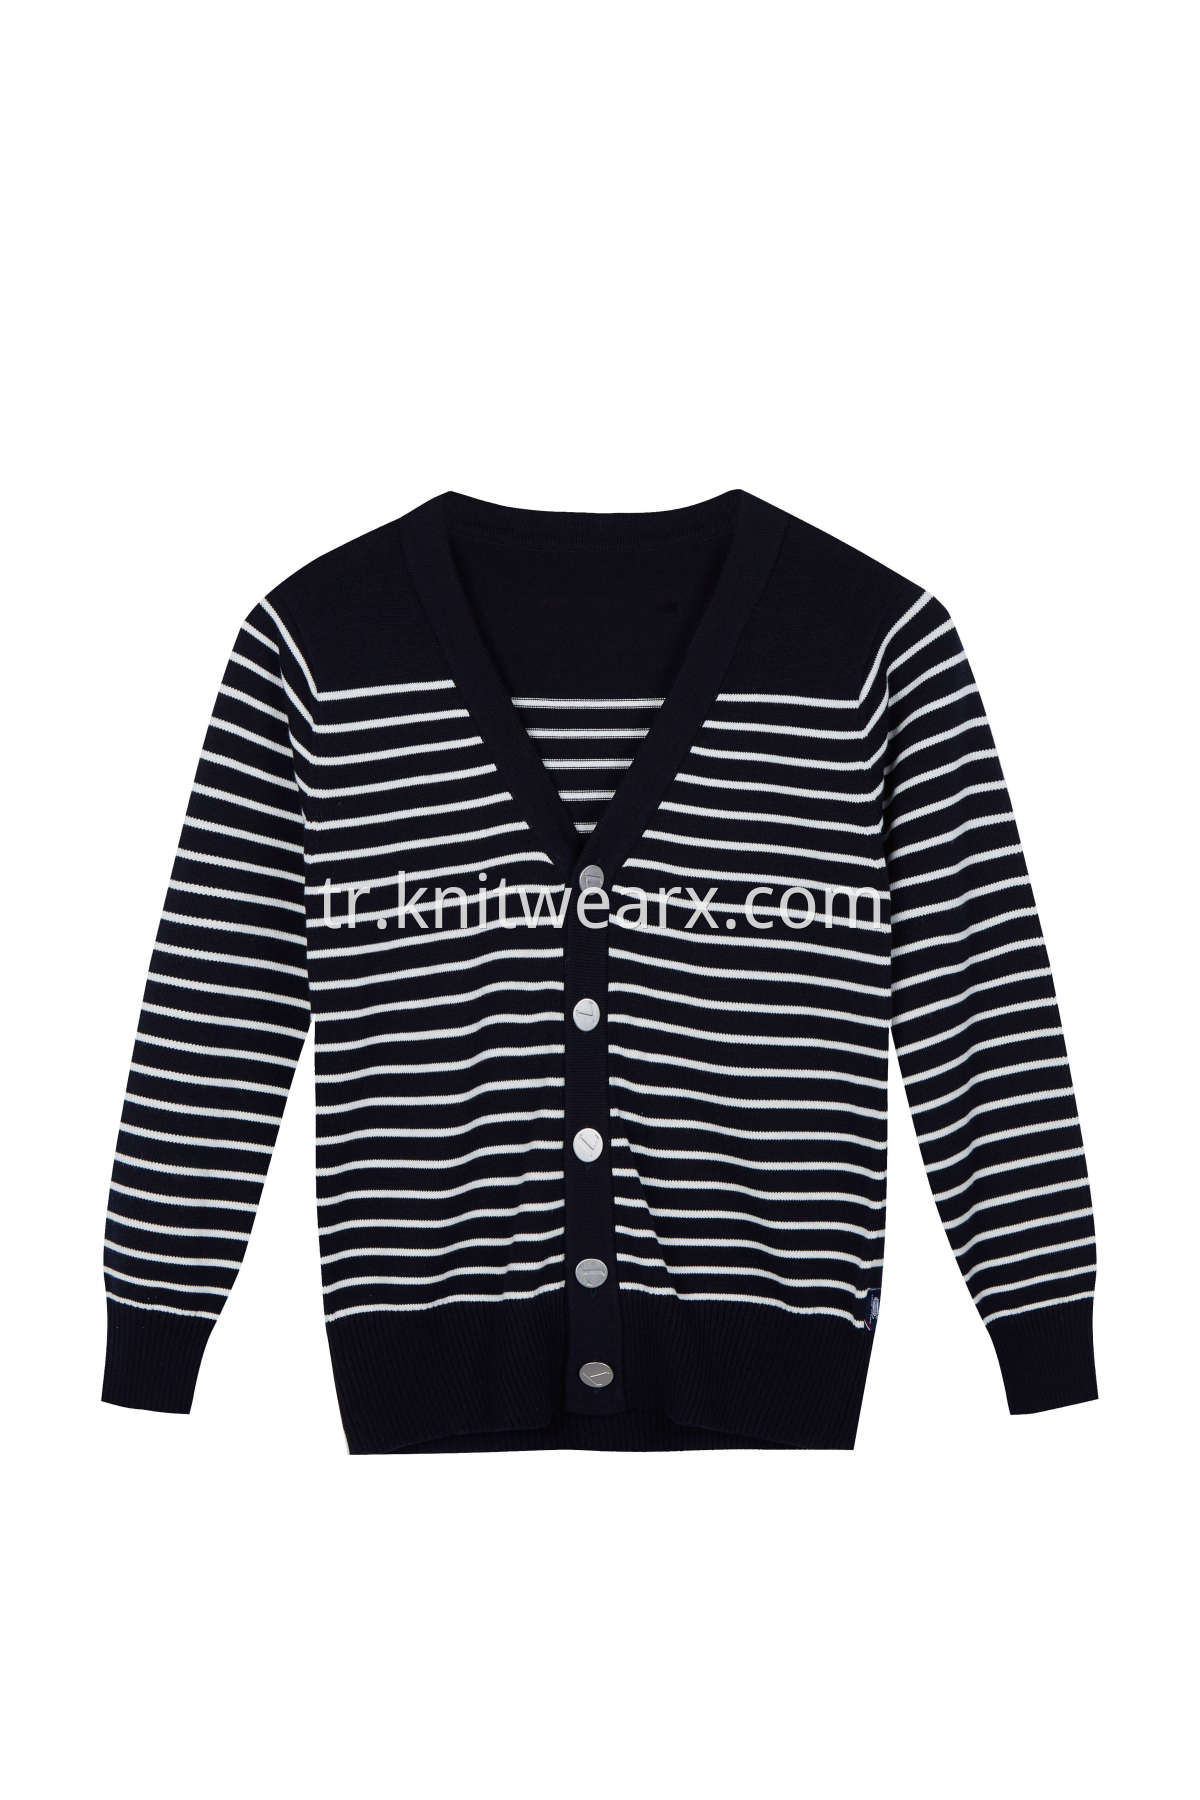 Boy's Sweater Stripe Vest Cotton V-Neck School Uniform Button Cardigan